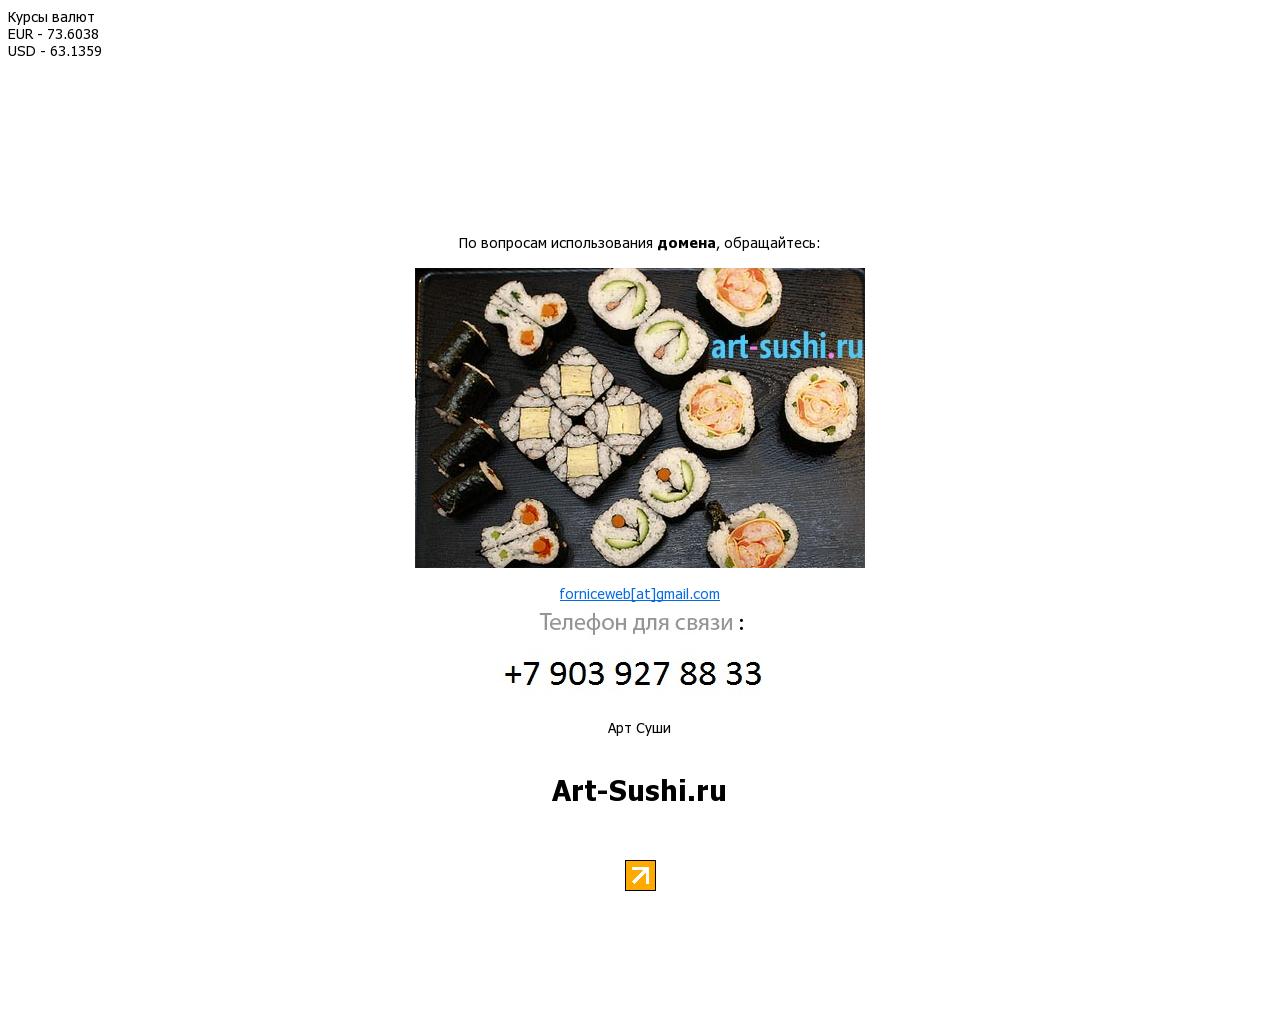 Изображение сайта art-sushi.ru в разрешении 1280x1024